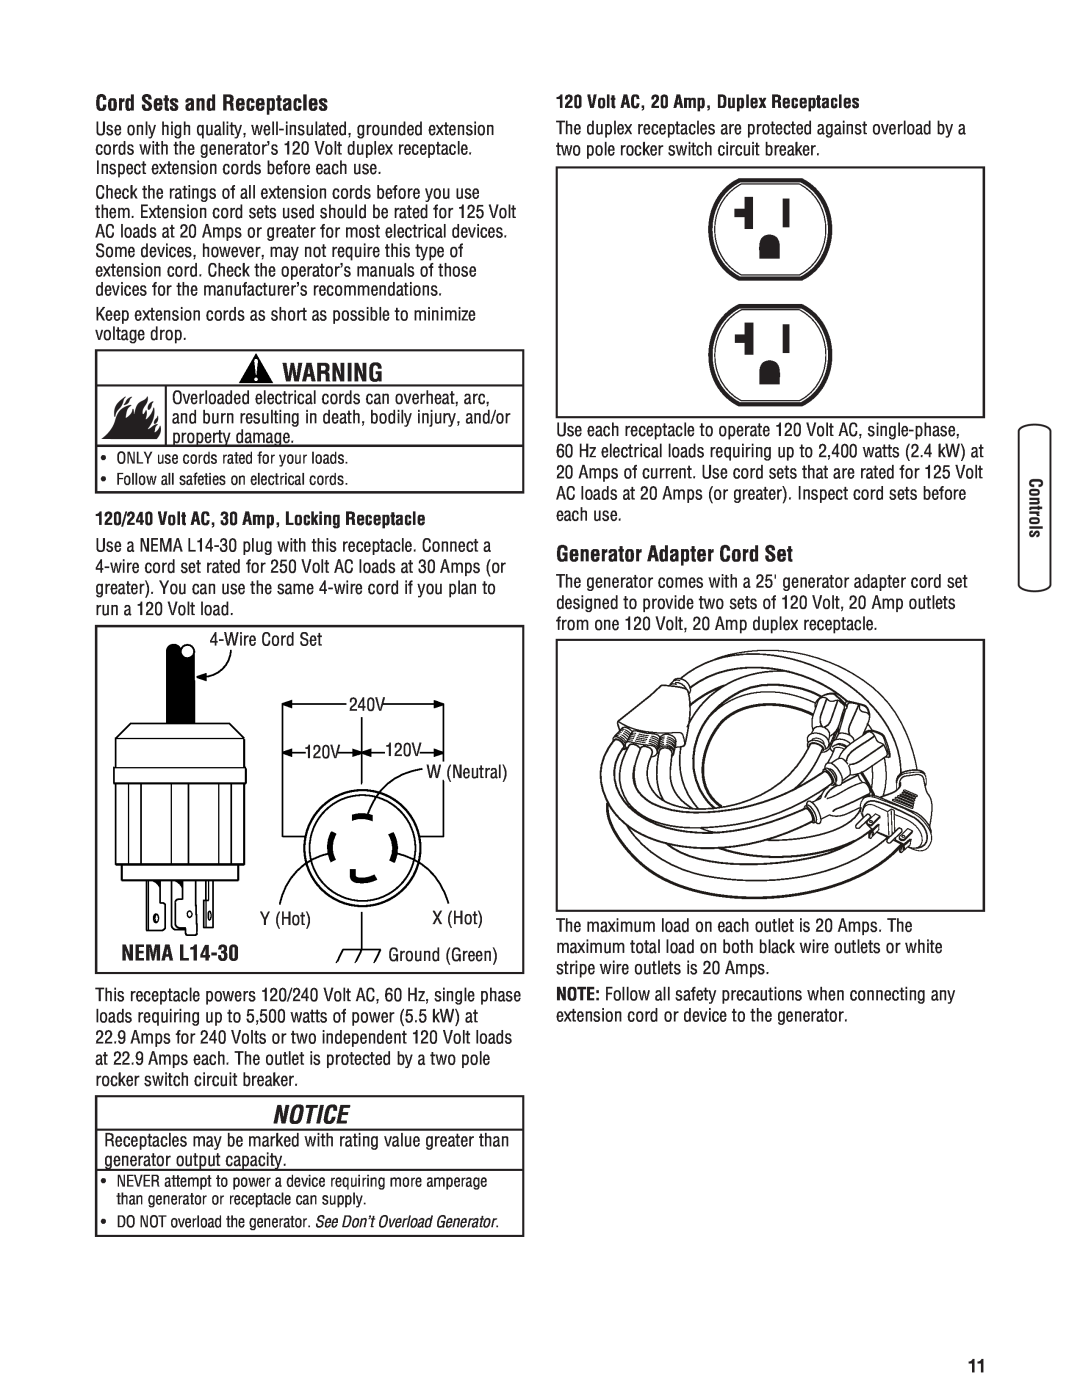 Briggs & Stratton Portable Generator manual Cord Sets and Receptacles, NEMA L14-30, Generator Adapter Cord Set 